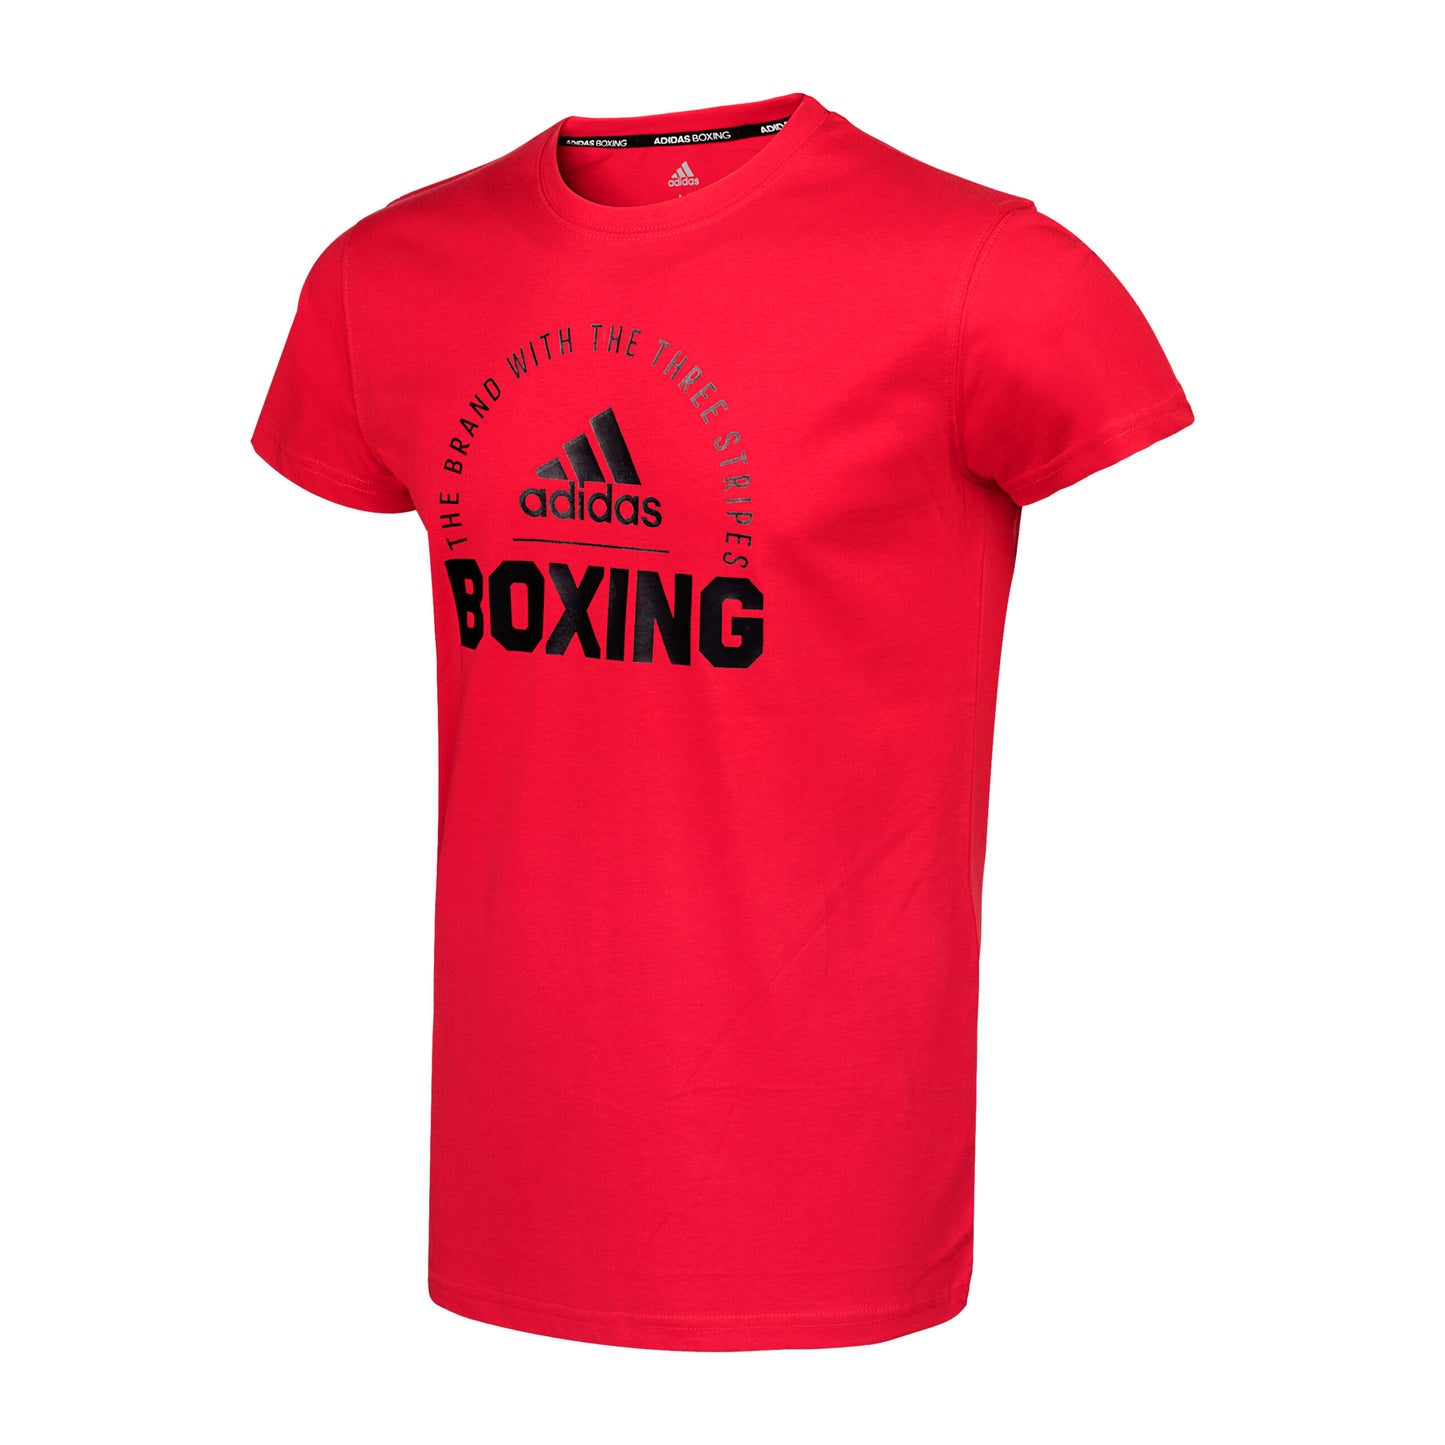 Clts21 B Adidas Boxing T Shirt Red 03